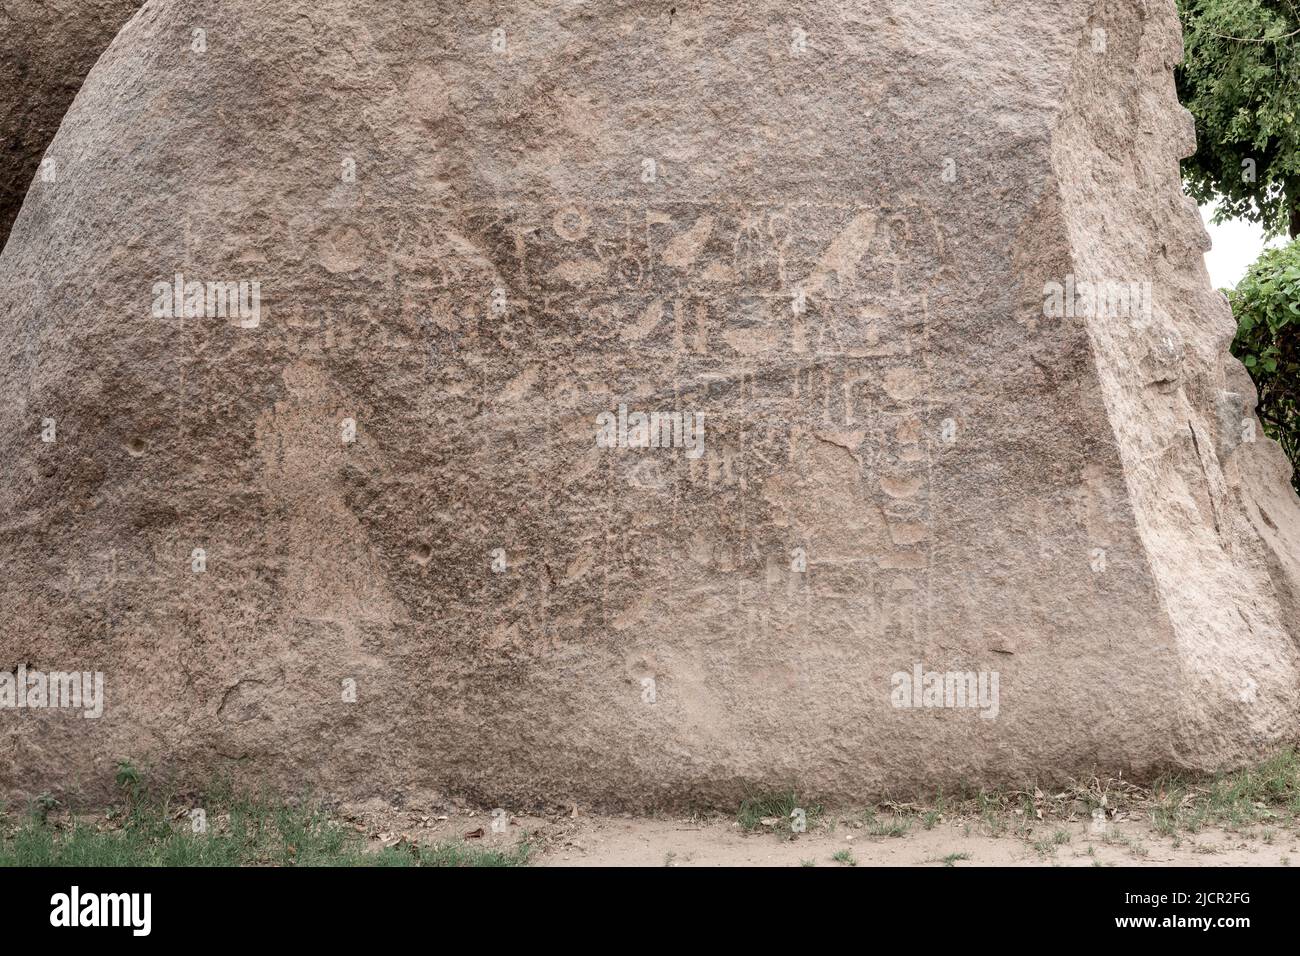 Granite boulders with pharaonic inscriptions, Aswan, Egypt Stock Photo